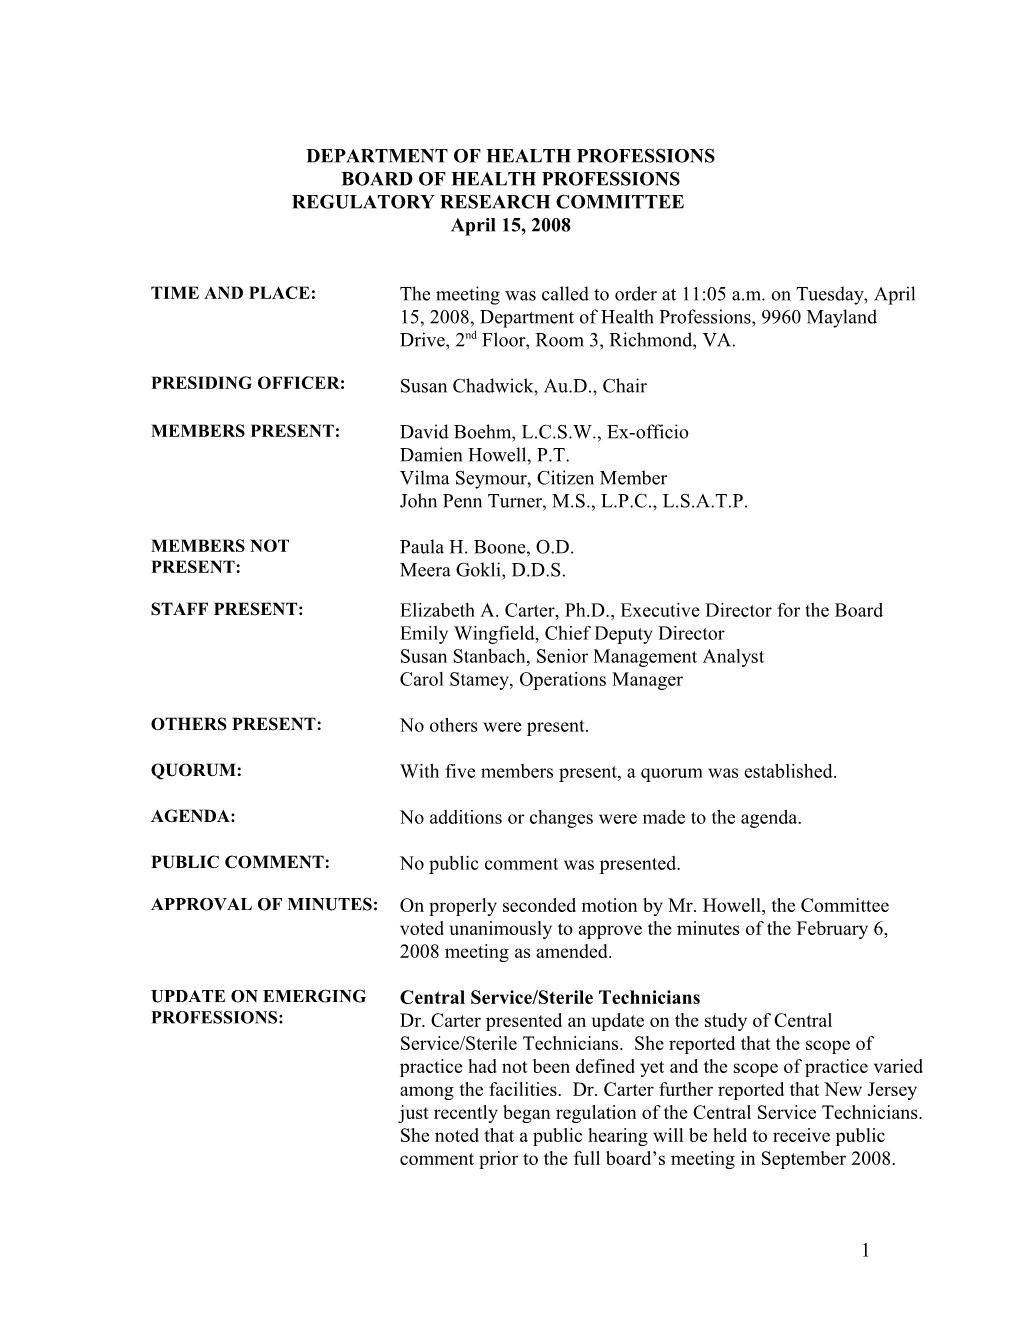 Board Of Health Professions Minutes April 2008